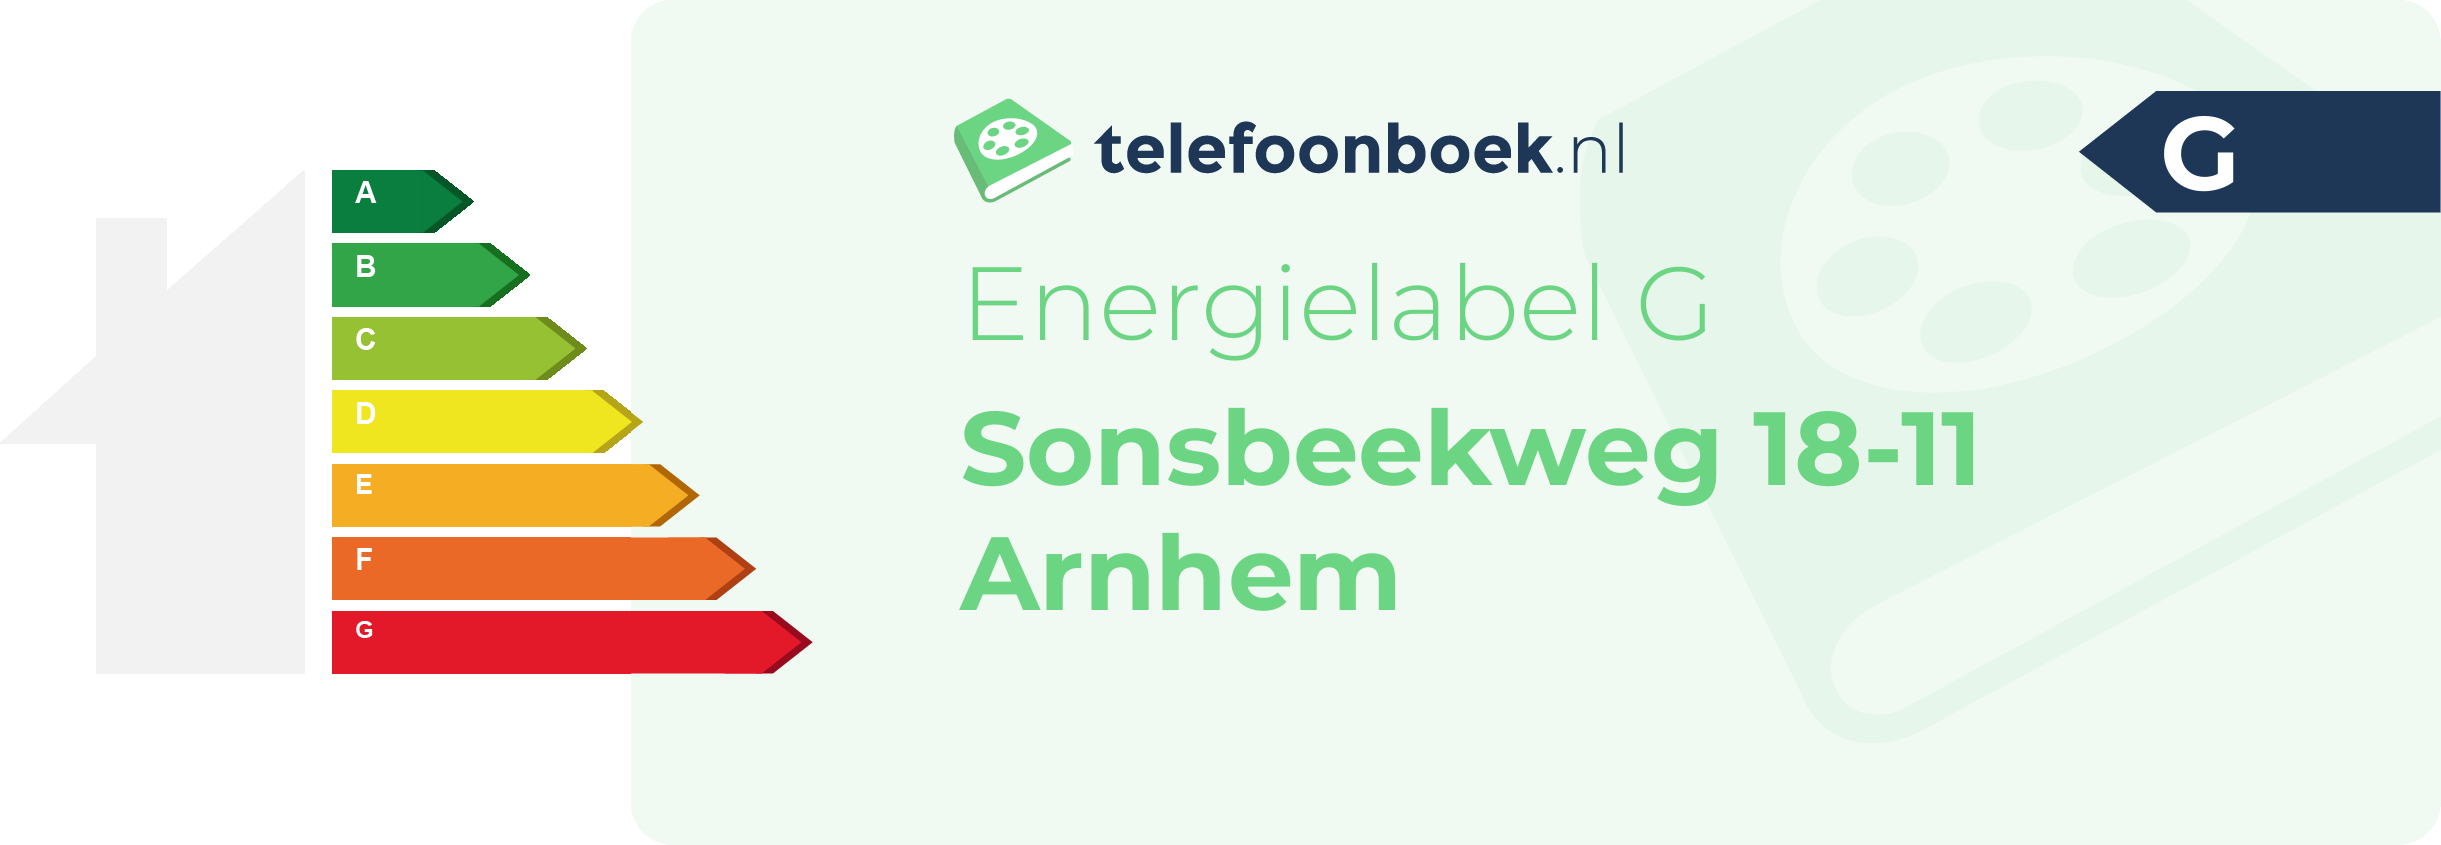 Energielabel Sonsbeekweg 18-11 Arnhem